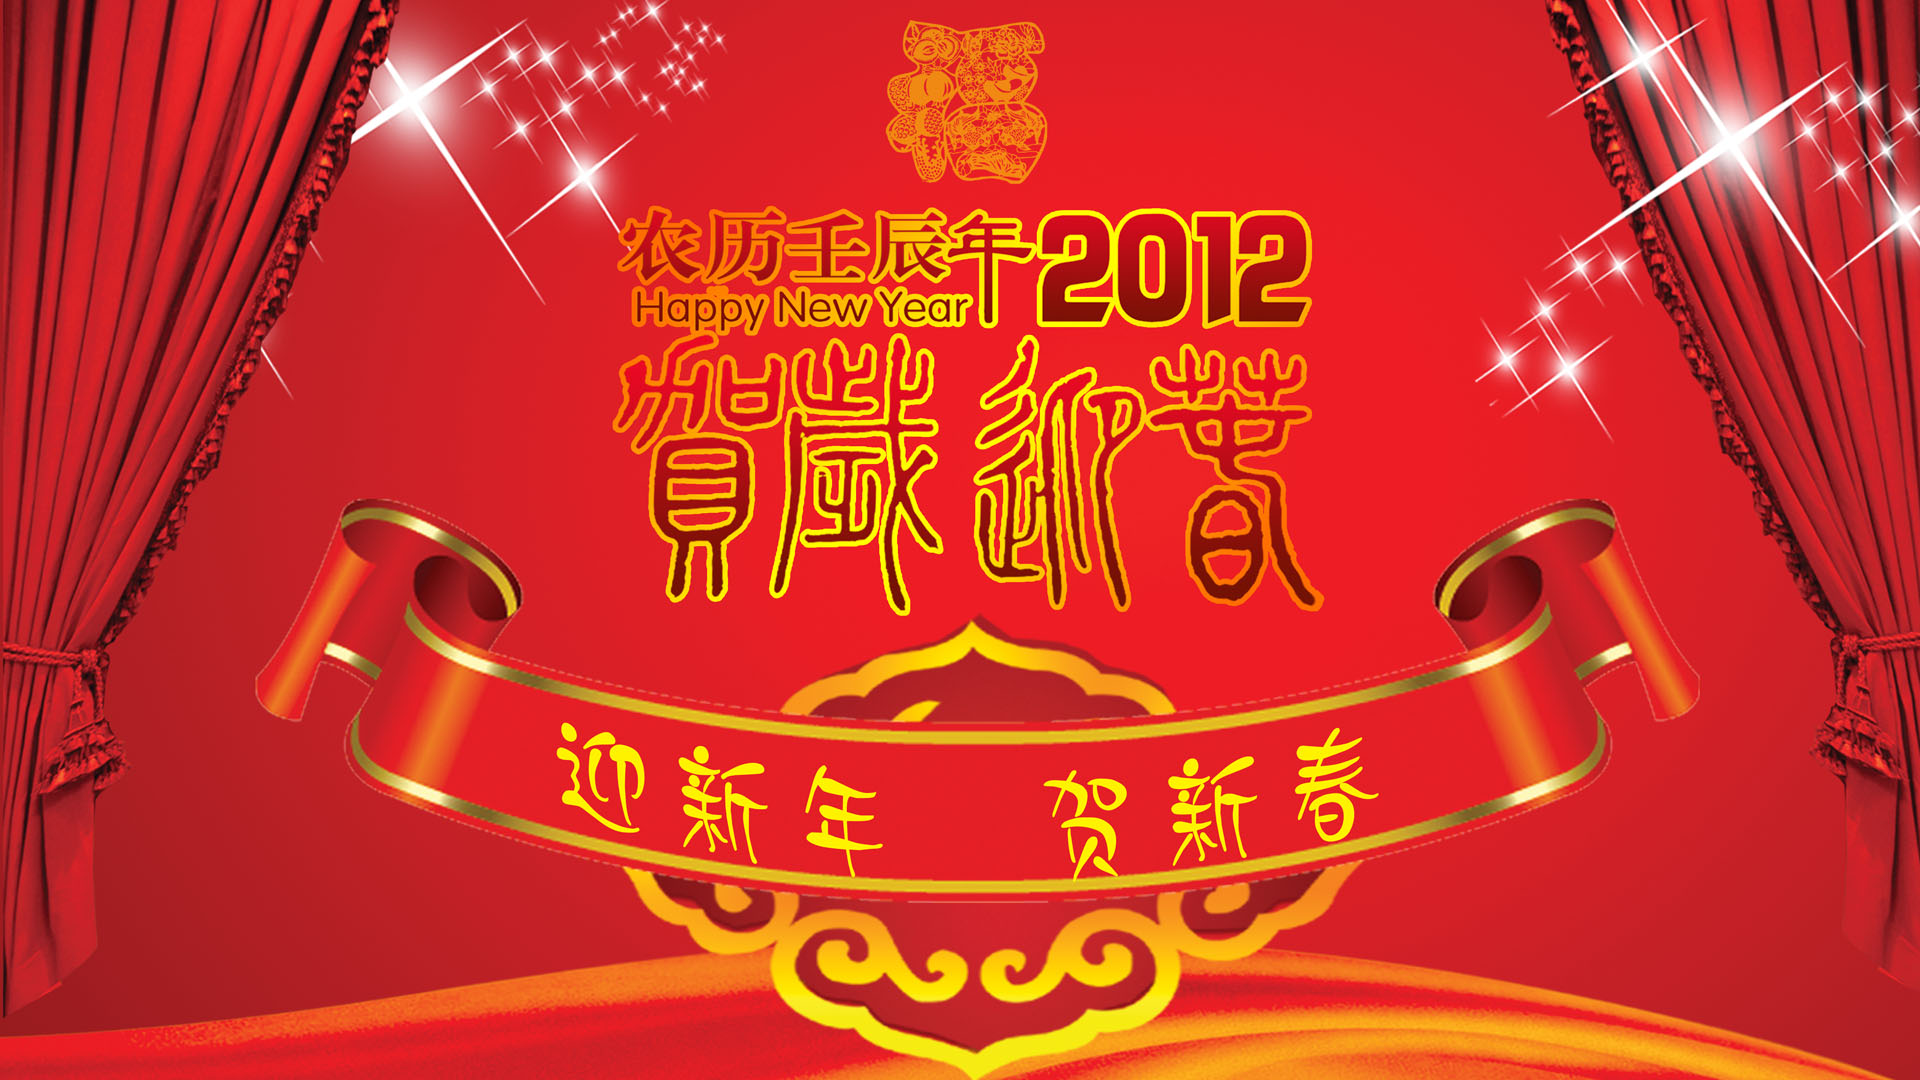 2012 New Year Celebration Spring Desktop Wallpaper